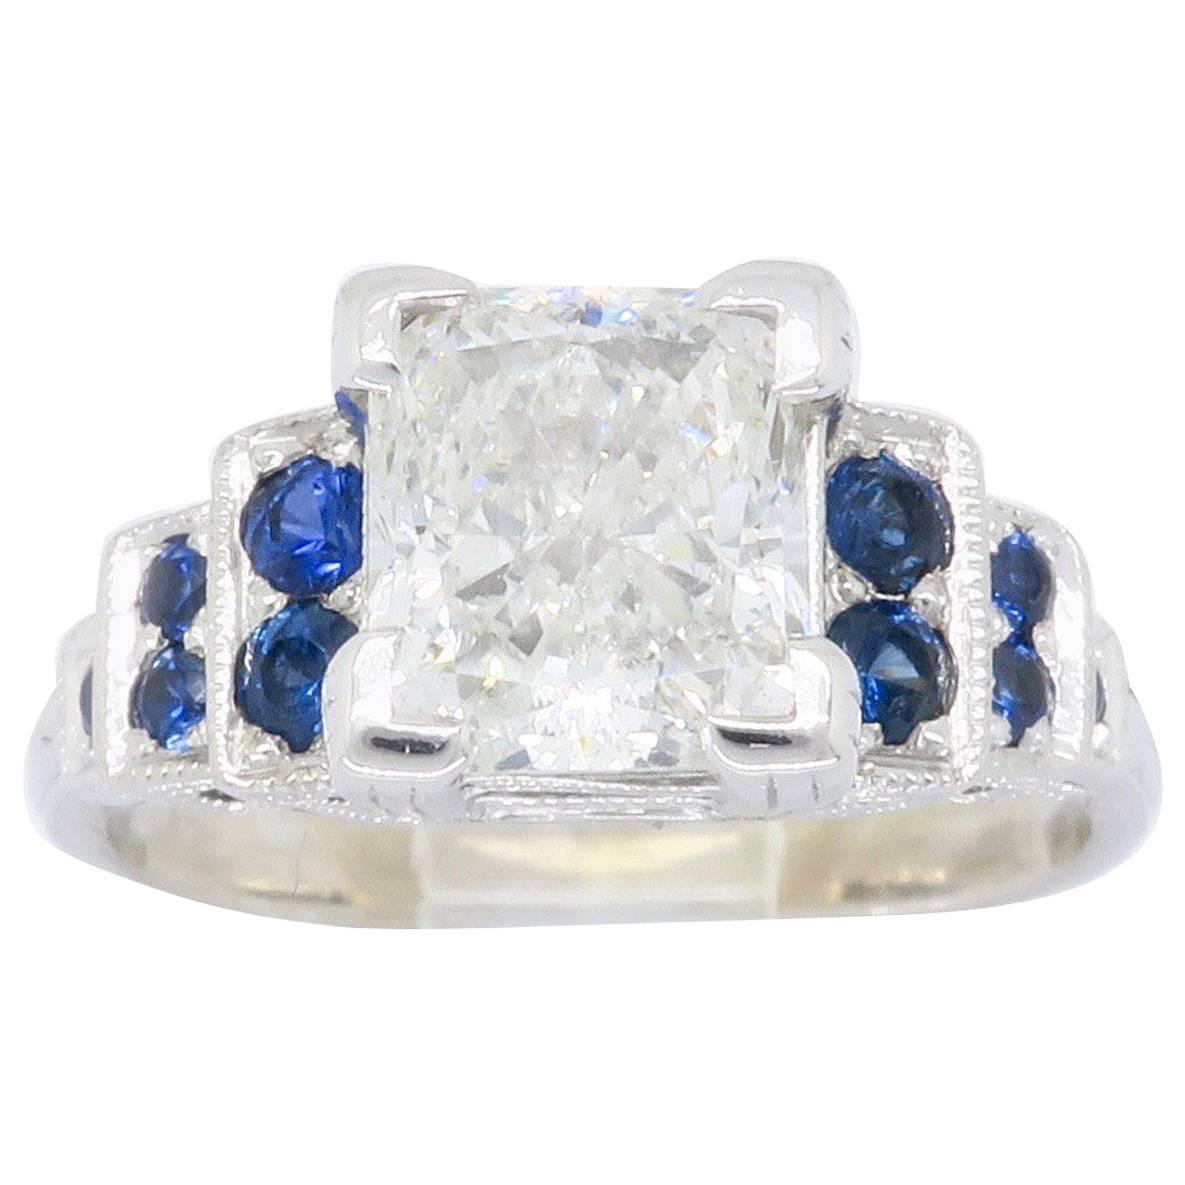 1.40 Carat Princess Cut Diamond and Sapphire Ring